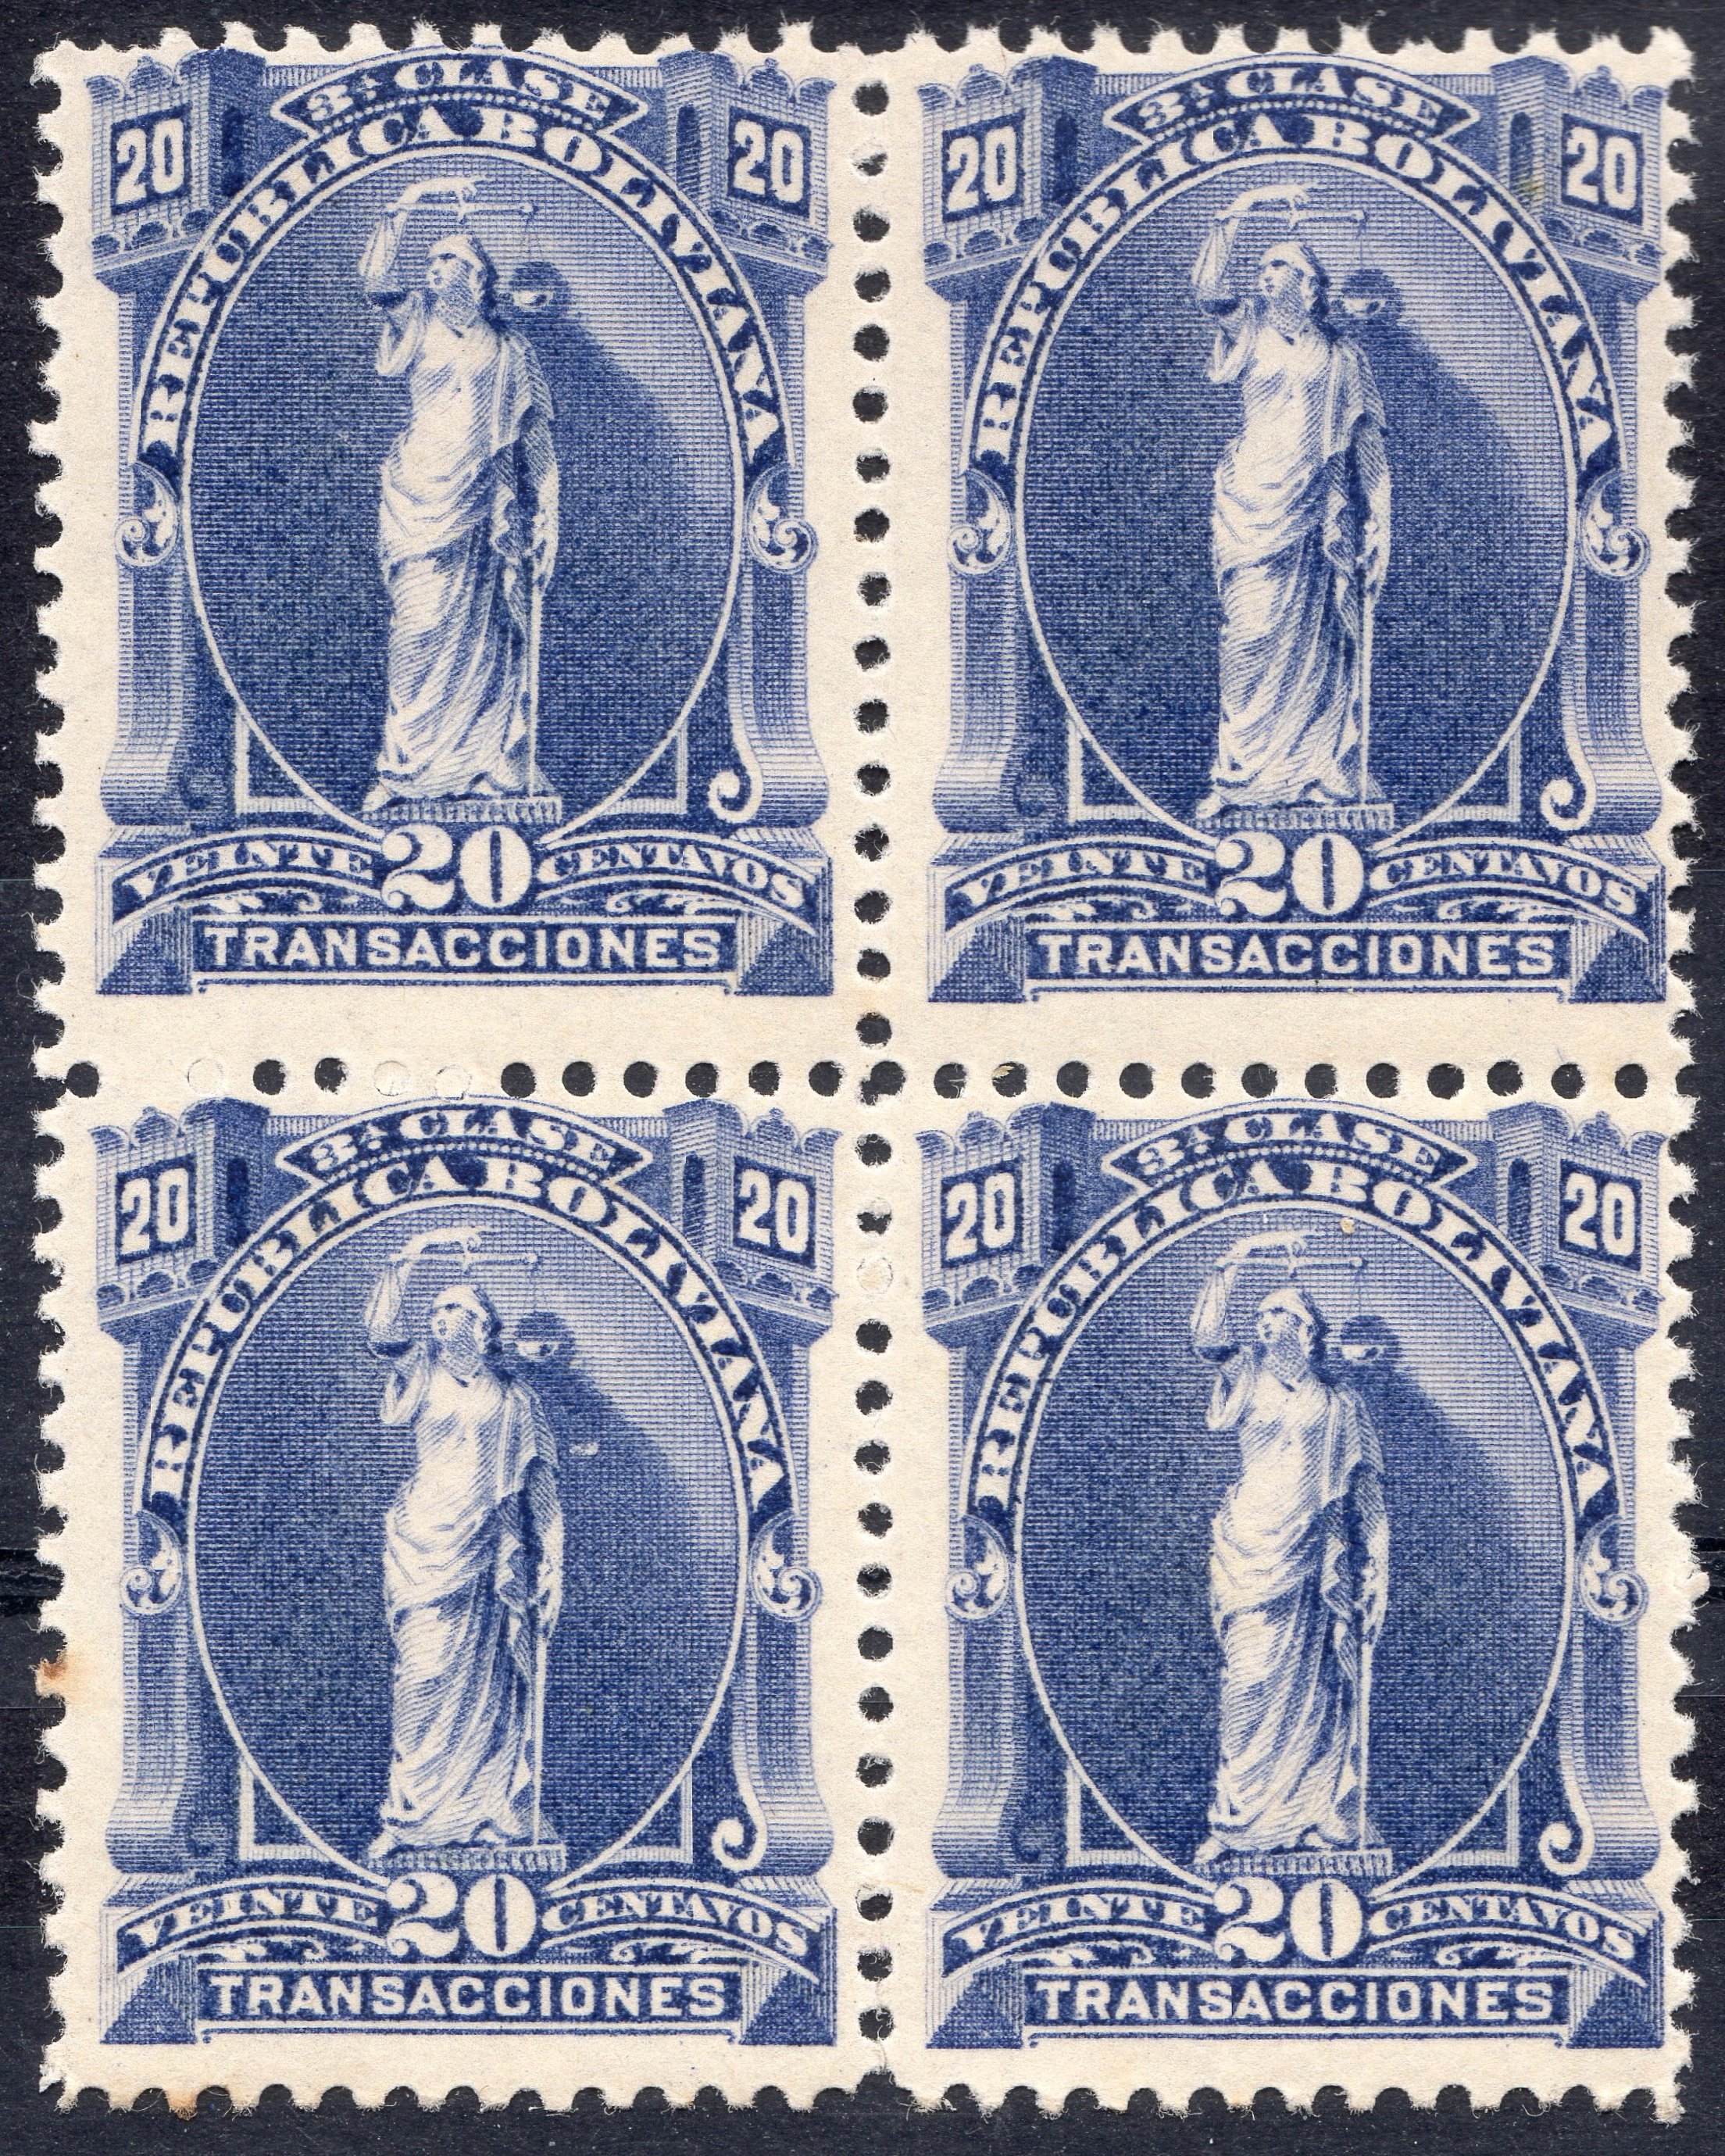 Bolivia 20c revenue stamps ABNCo. c. 1883 or 1894